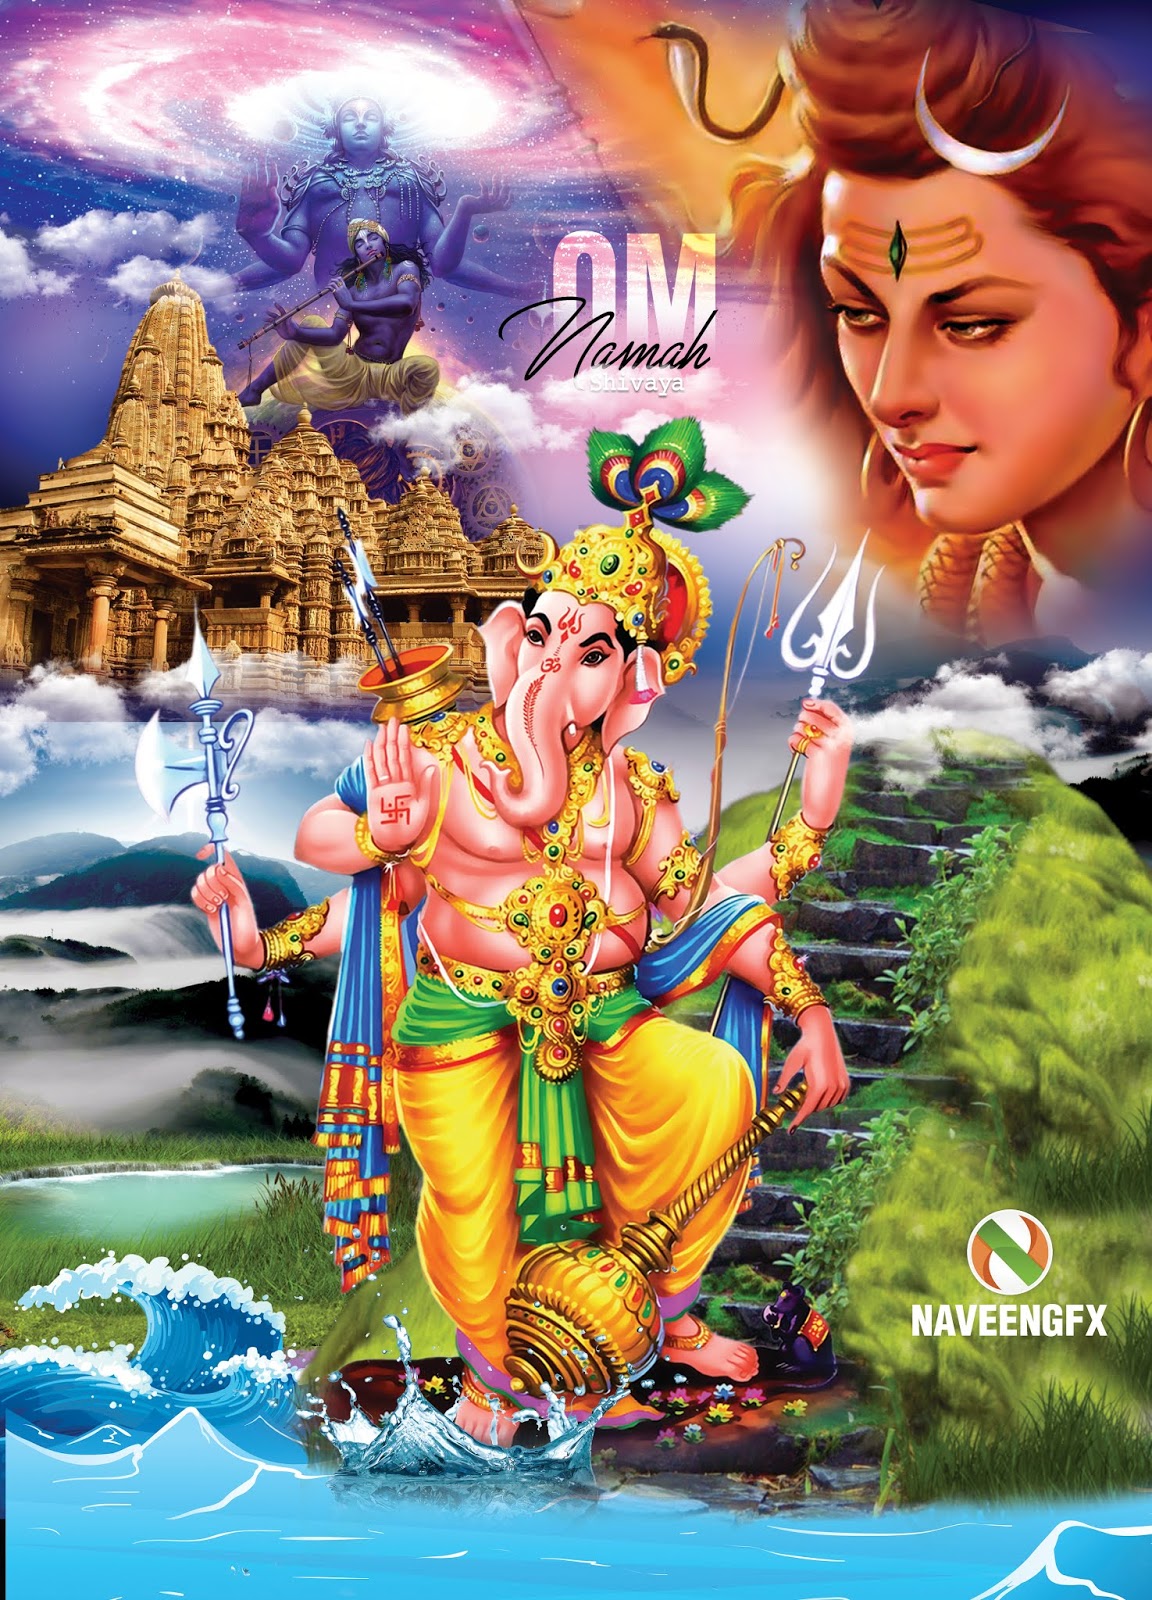 Lord vinayaka HD poster design with lord shiva images | naveengfx